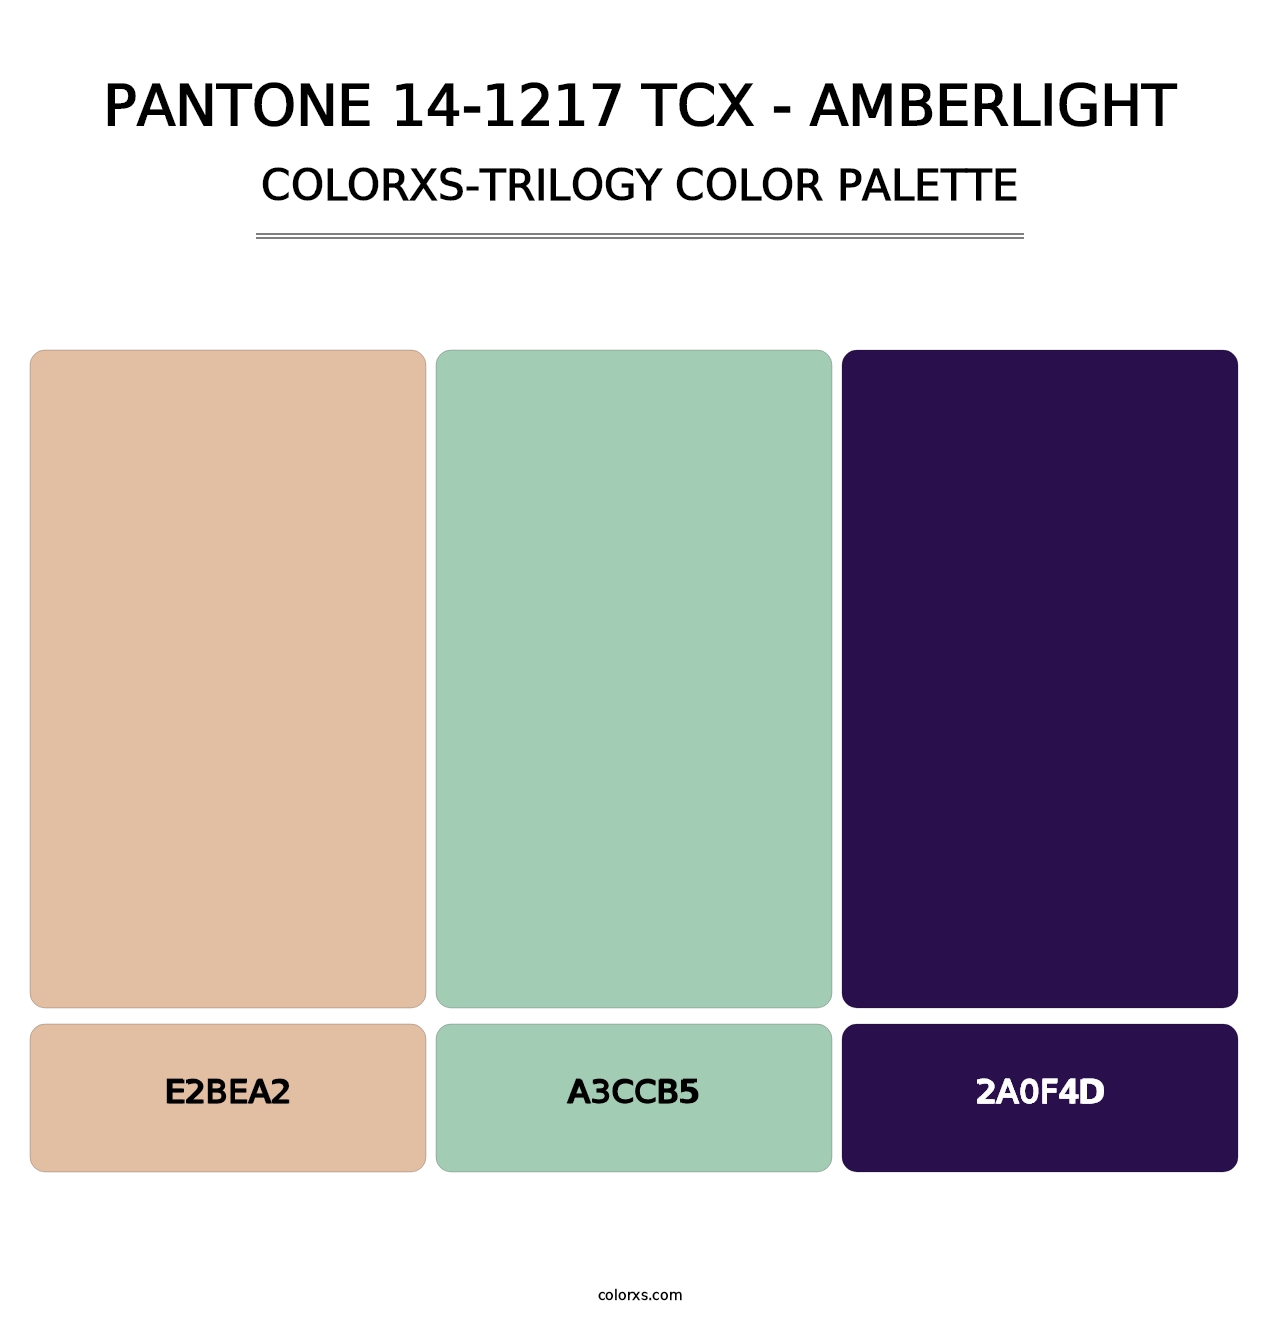 PANTONE 14-1217 TCX - Amberlight - Colorxs Trilogy Palette